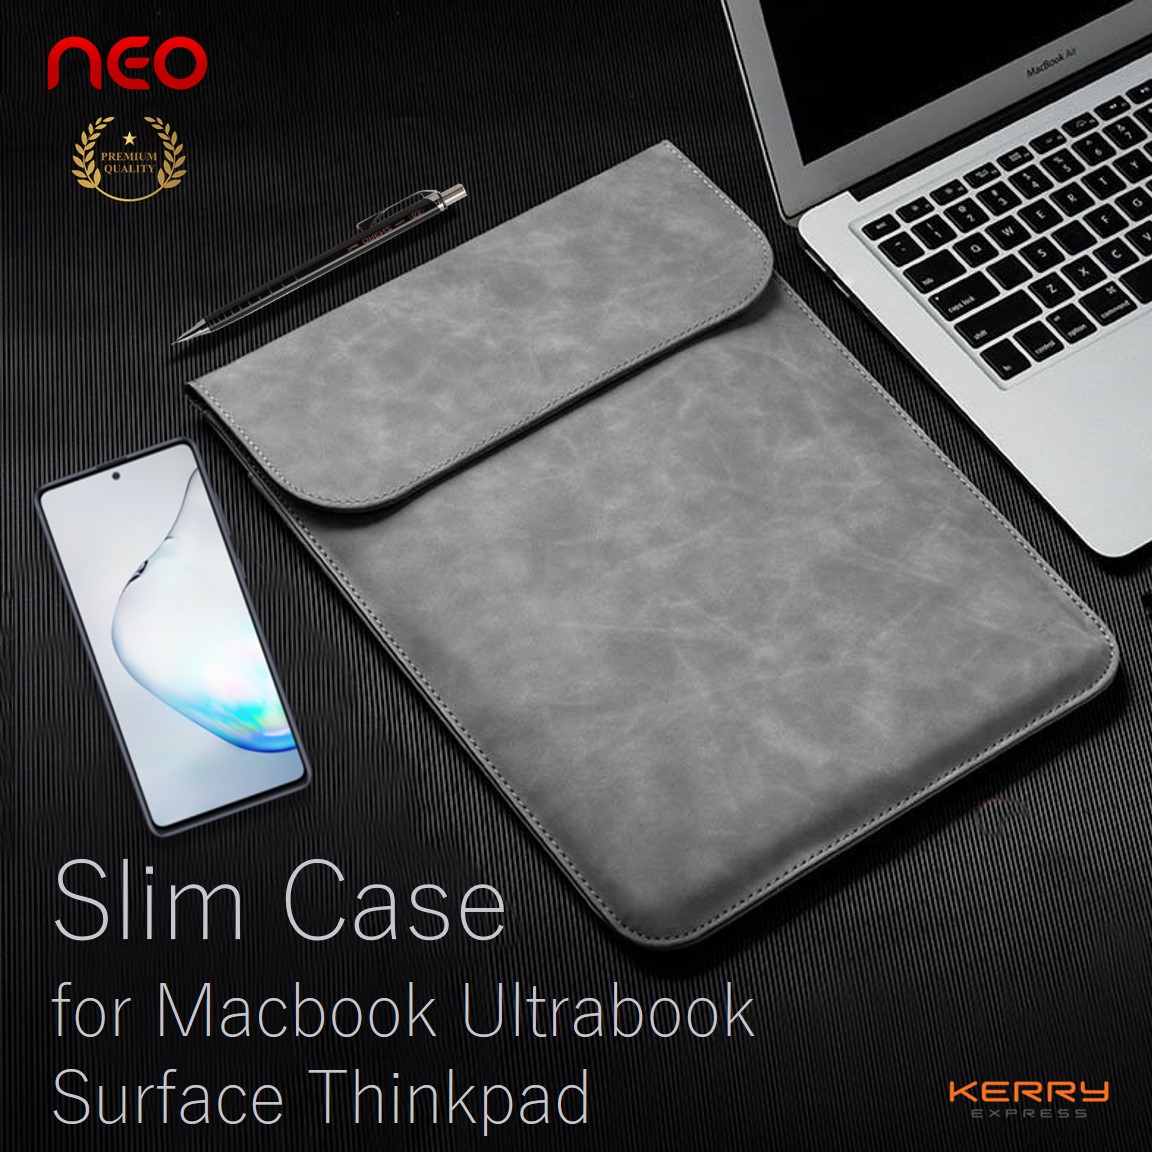 NEO กระเป๋าโน๊ตบุ๊ค กระเป๋าMacbook เคสโน๊ตบุ๊ค เคสแล็ปท็อป ขนาด 12.5, 13.3, 15.6 นิ้ว กระเป๋าคอมพิวเตอร์ เคสหนังใส่MacBook Slim PU Leather Case Cover for MacBook Air/Pro  Laptop 12.5-15.6 inch